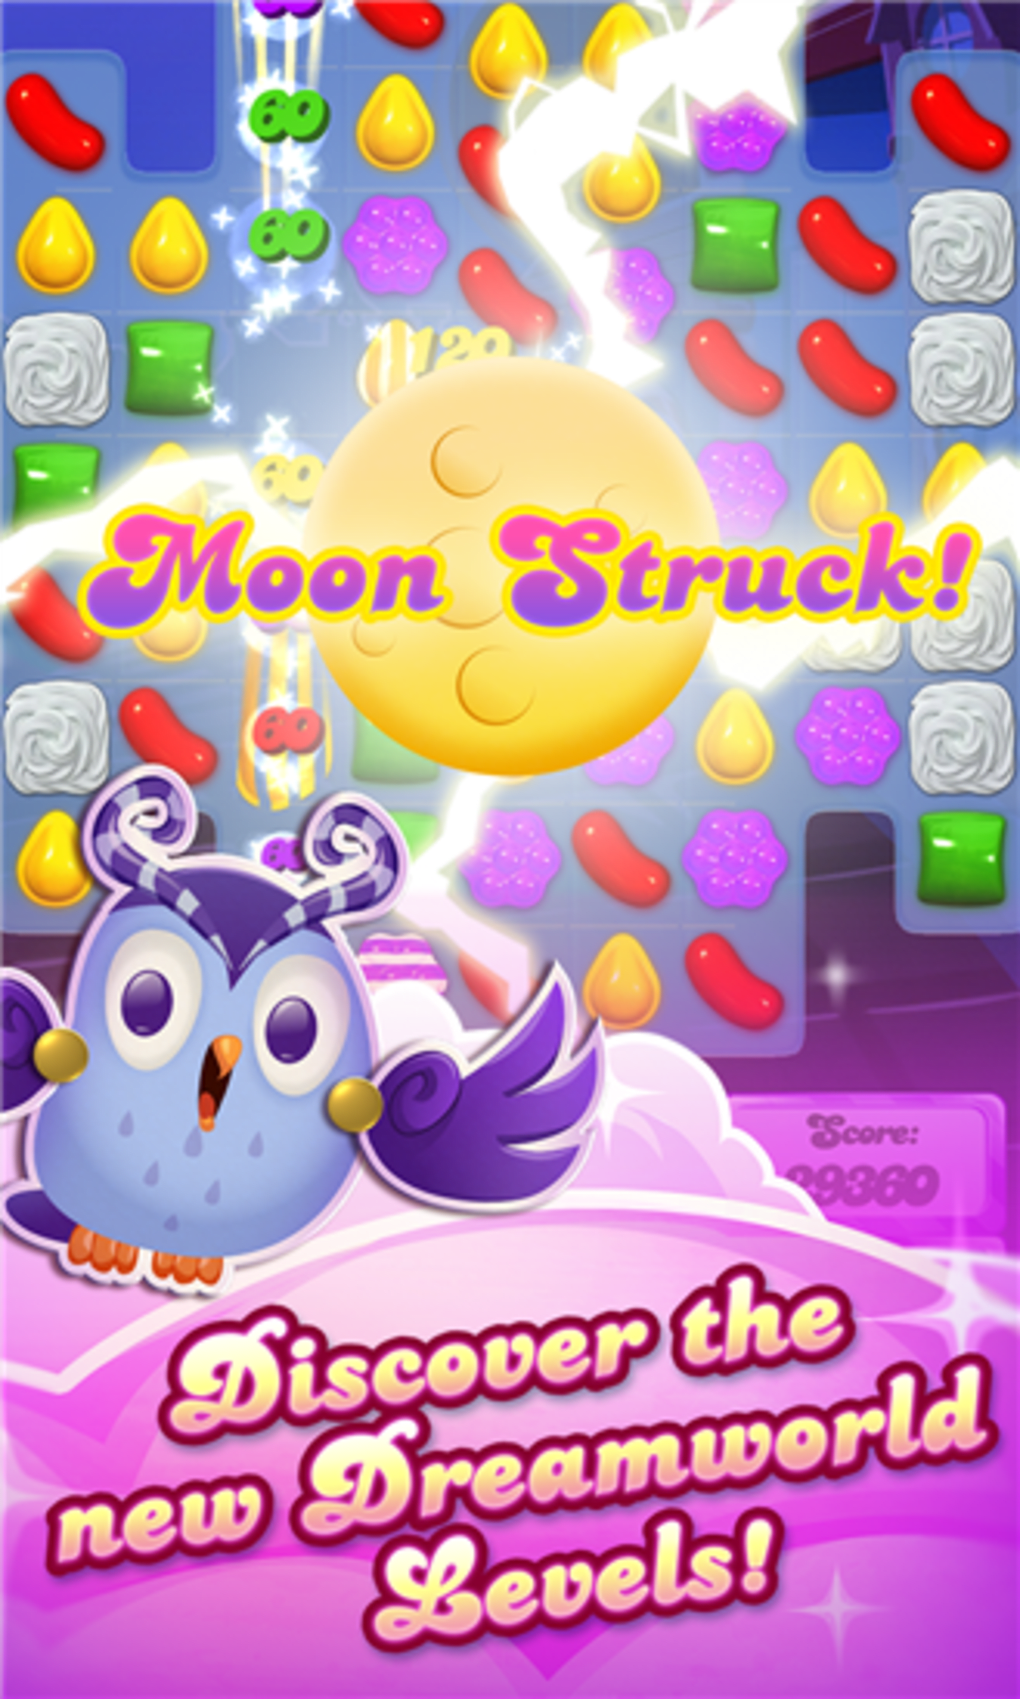 Candy Crush Saga Free Download For Windows 7